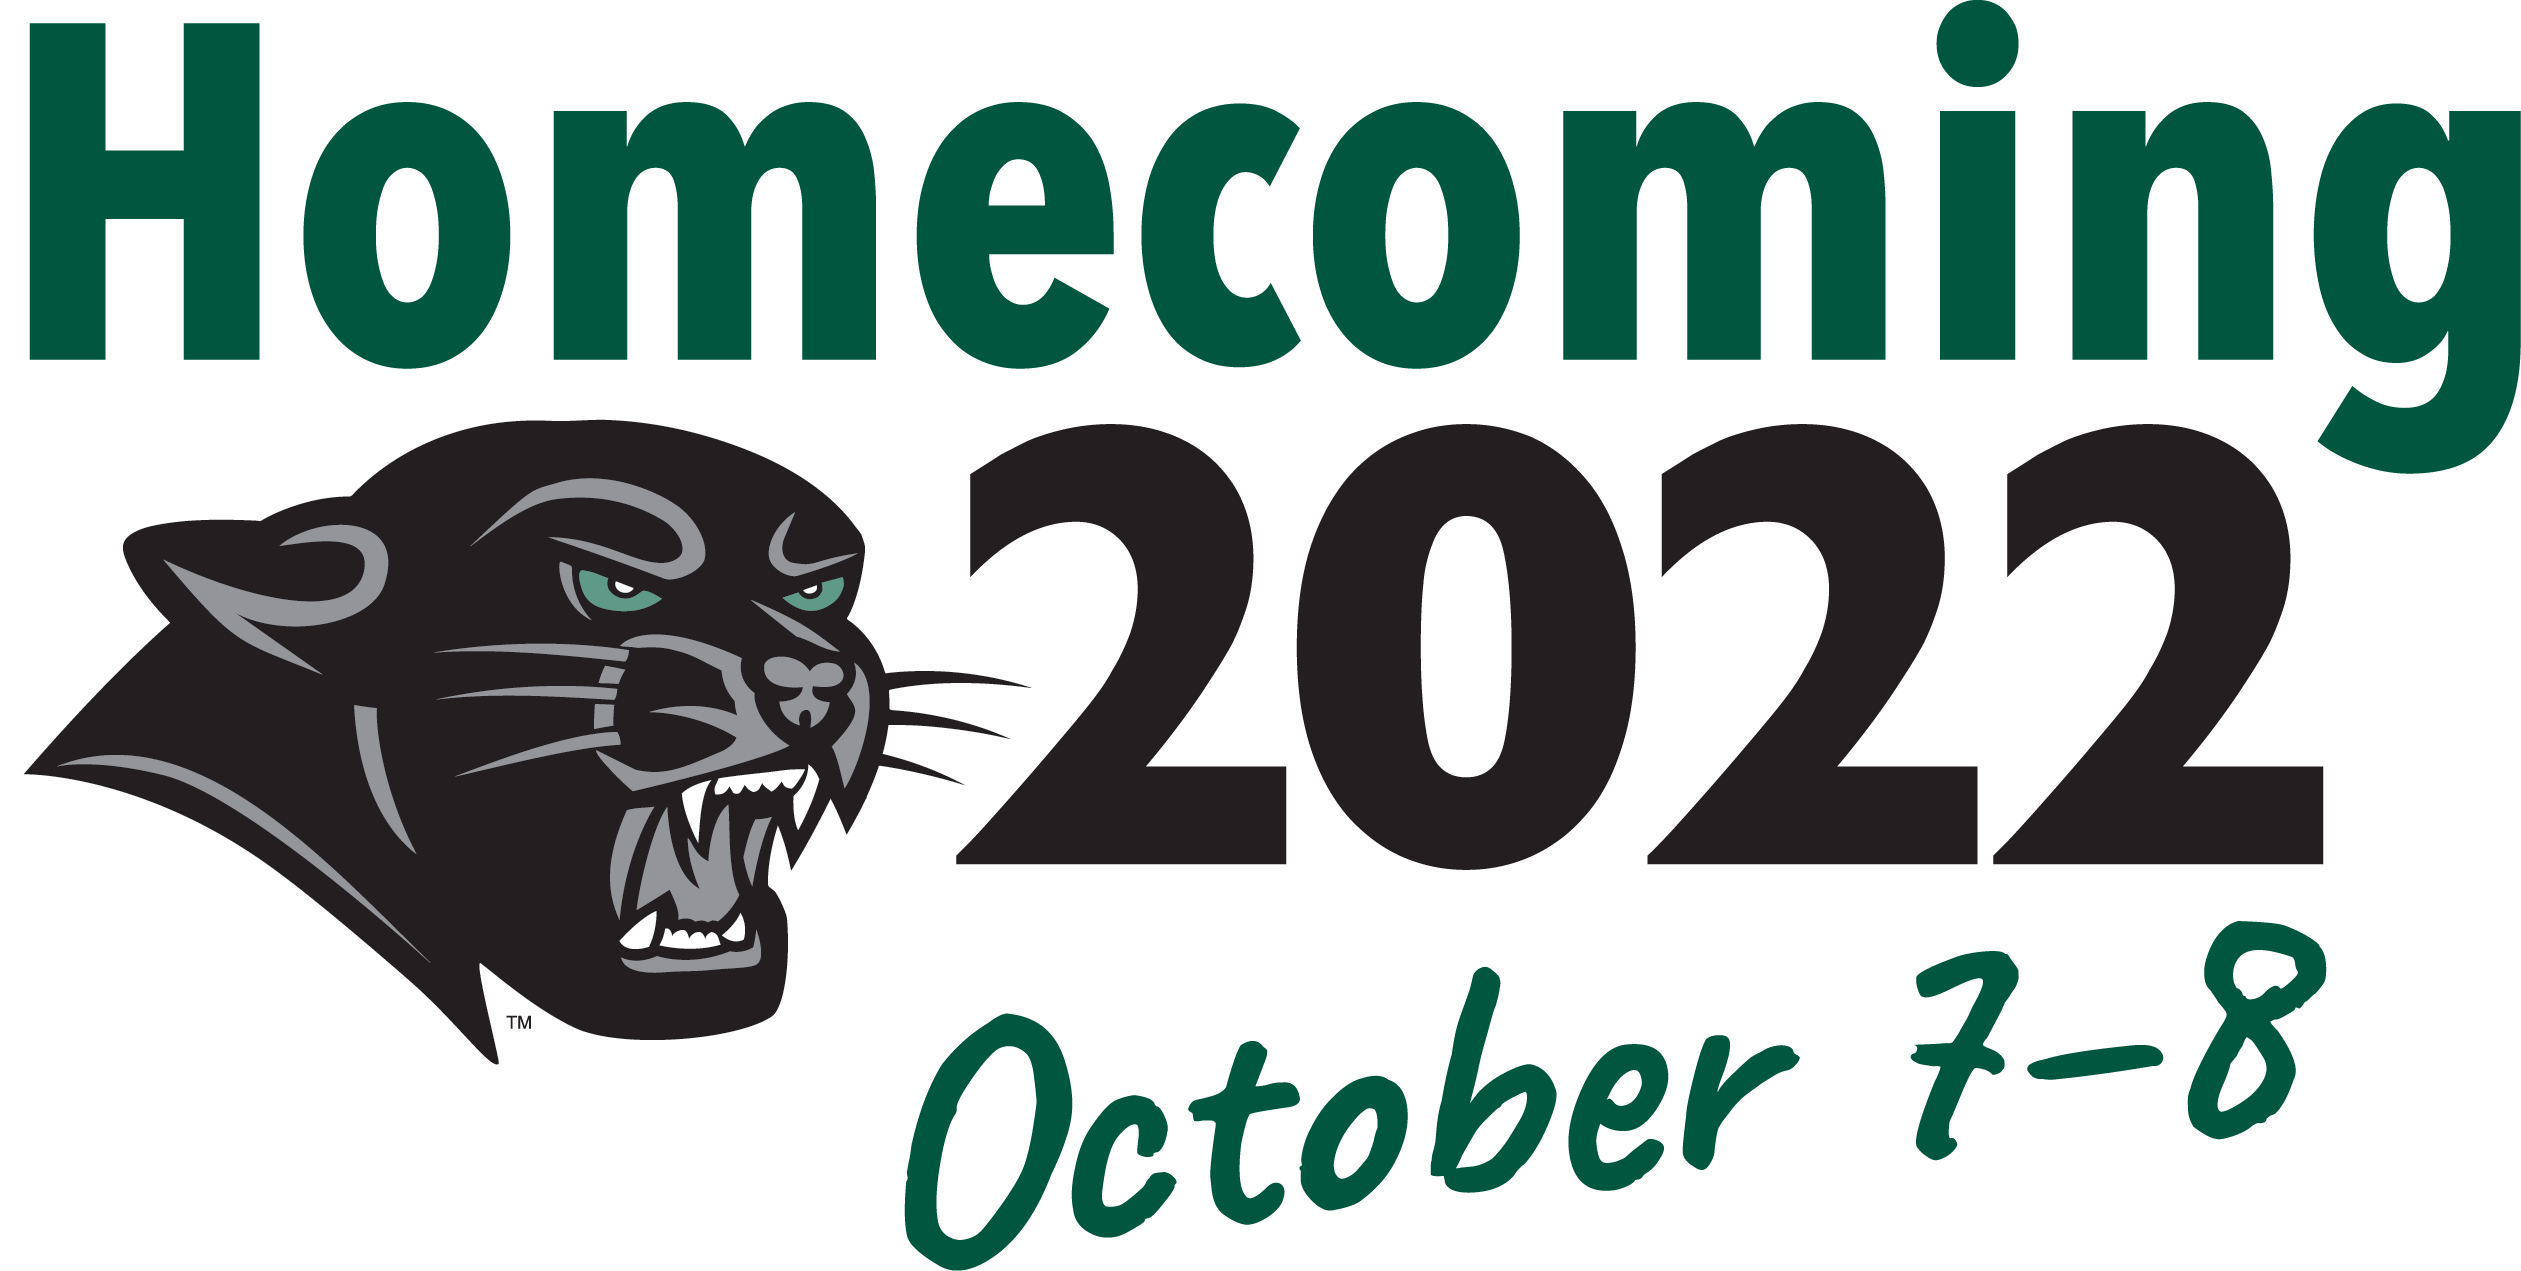 Homecoming 2022 October 7-8